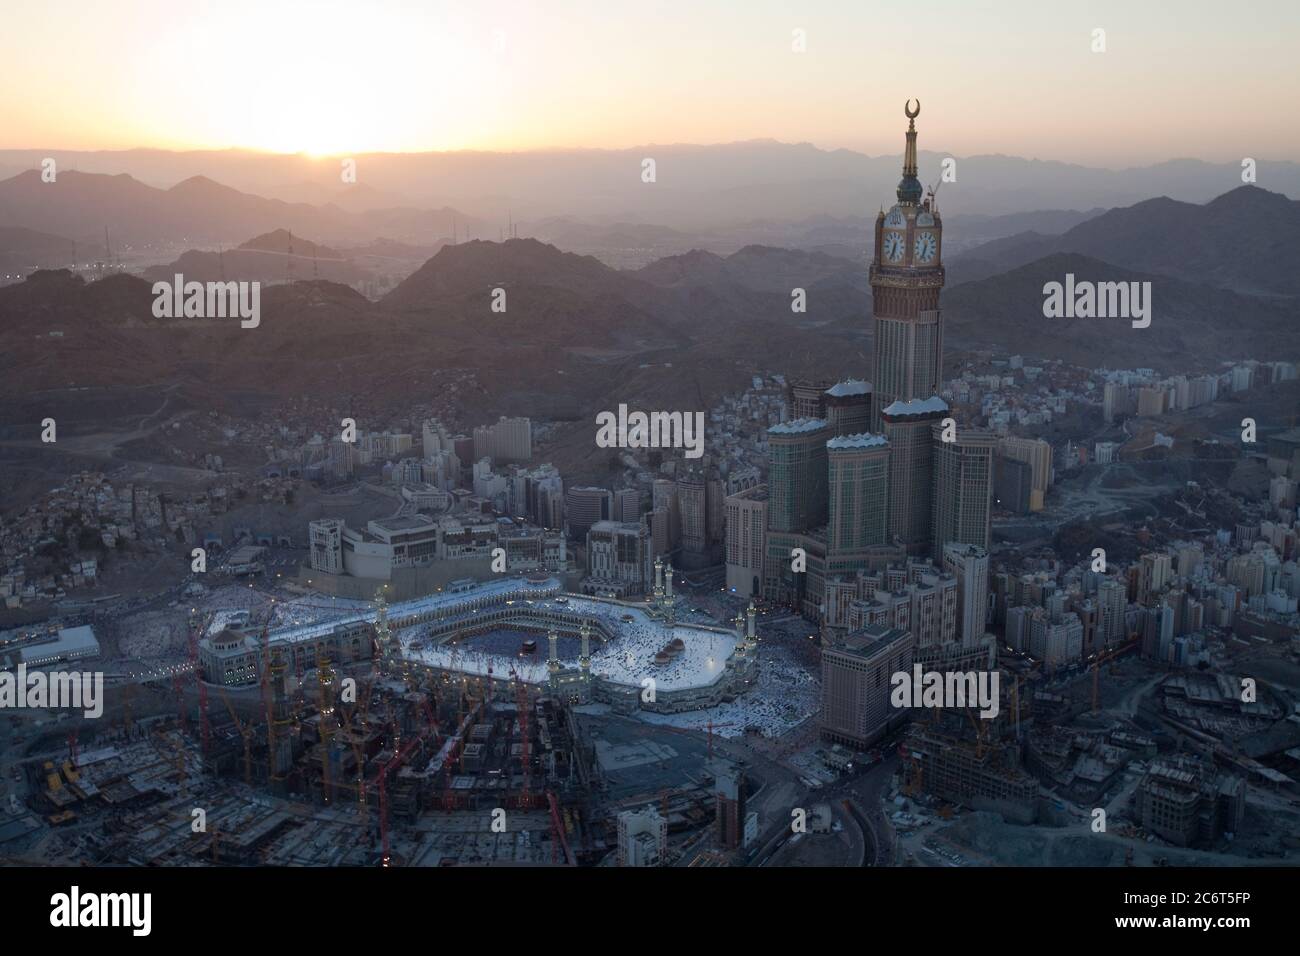 Abraj Al Bait, Saudi Arabia, Makkah Royal Clock Tower and Grand Mosque Stock Photo